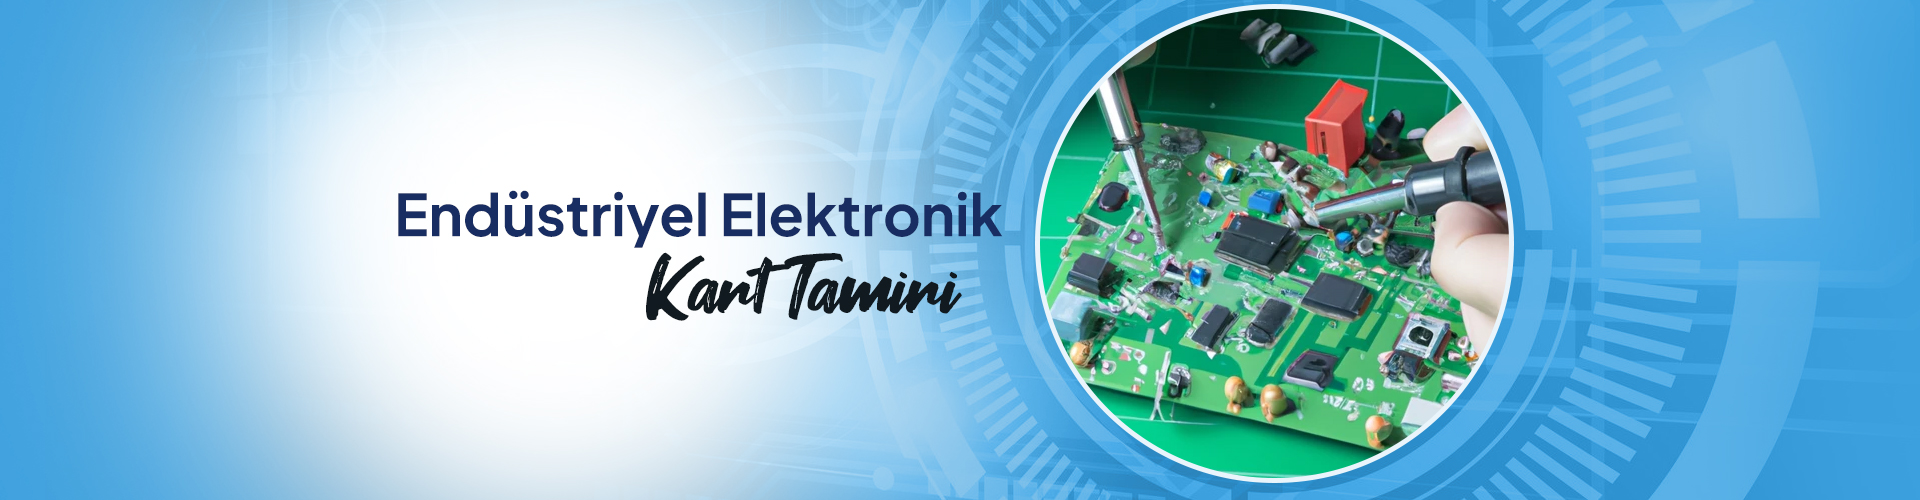 Endüstriyel Elektronik Kart Tamiri